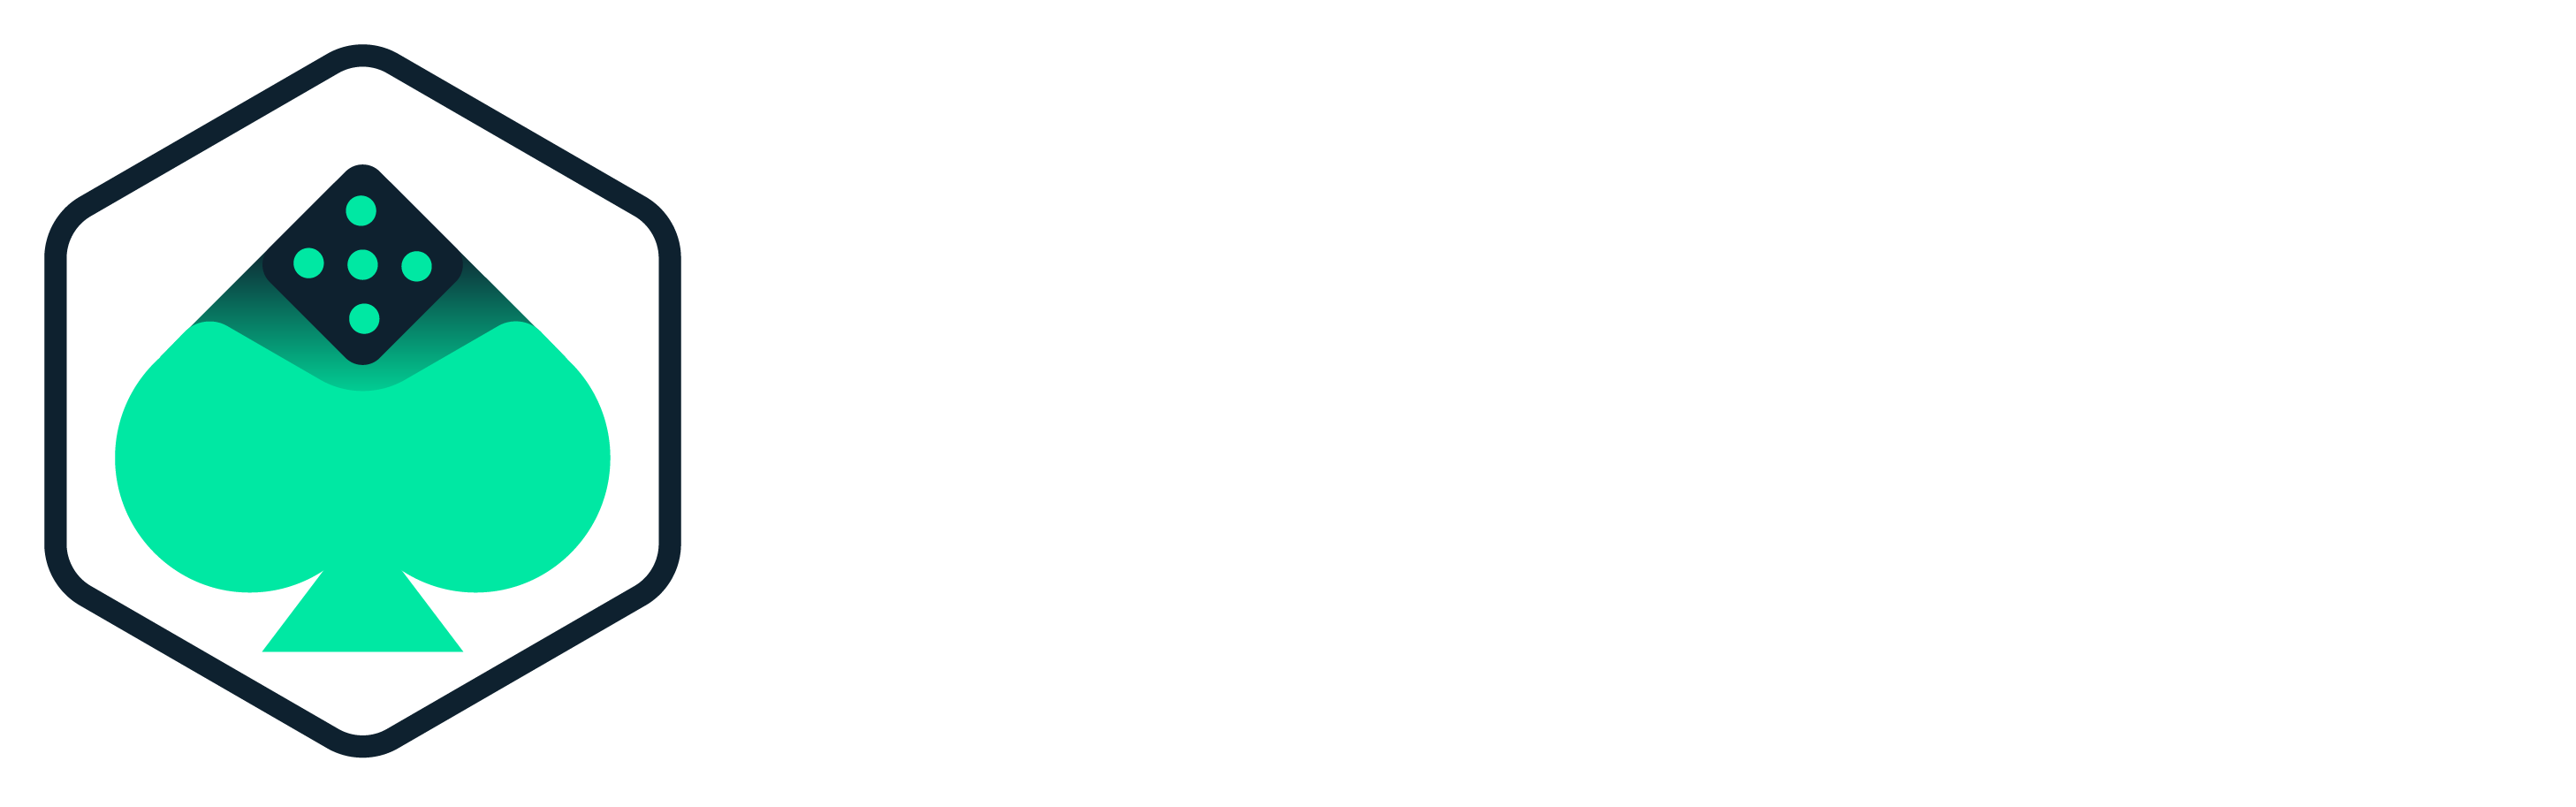 megadice-logo